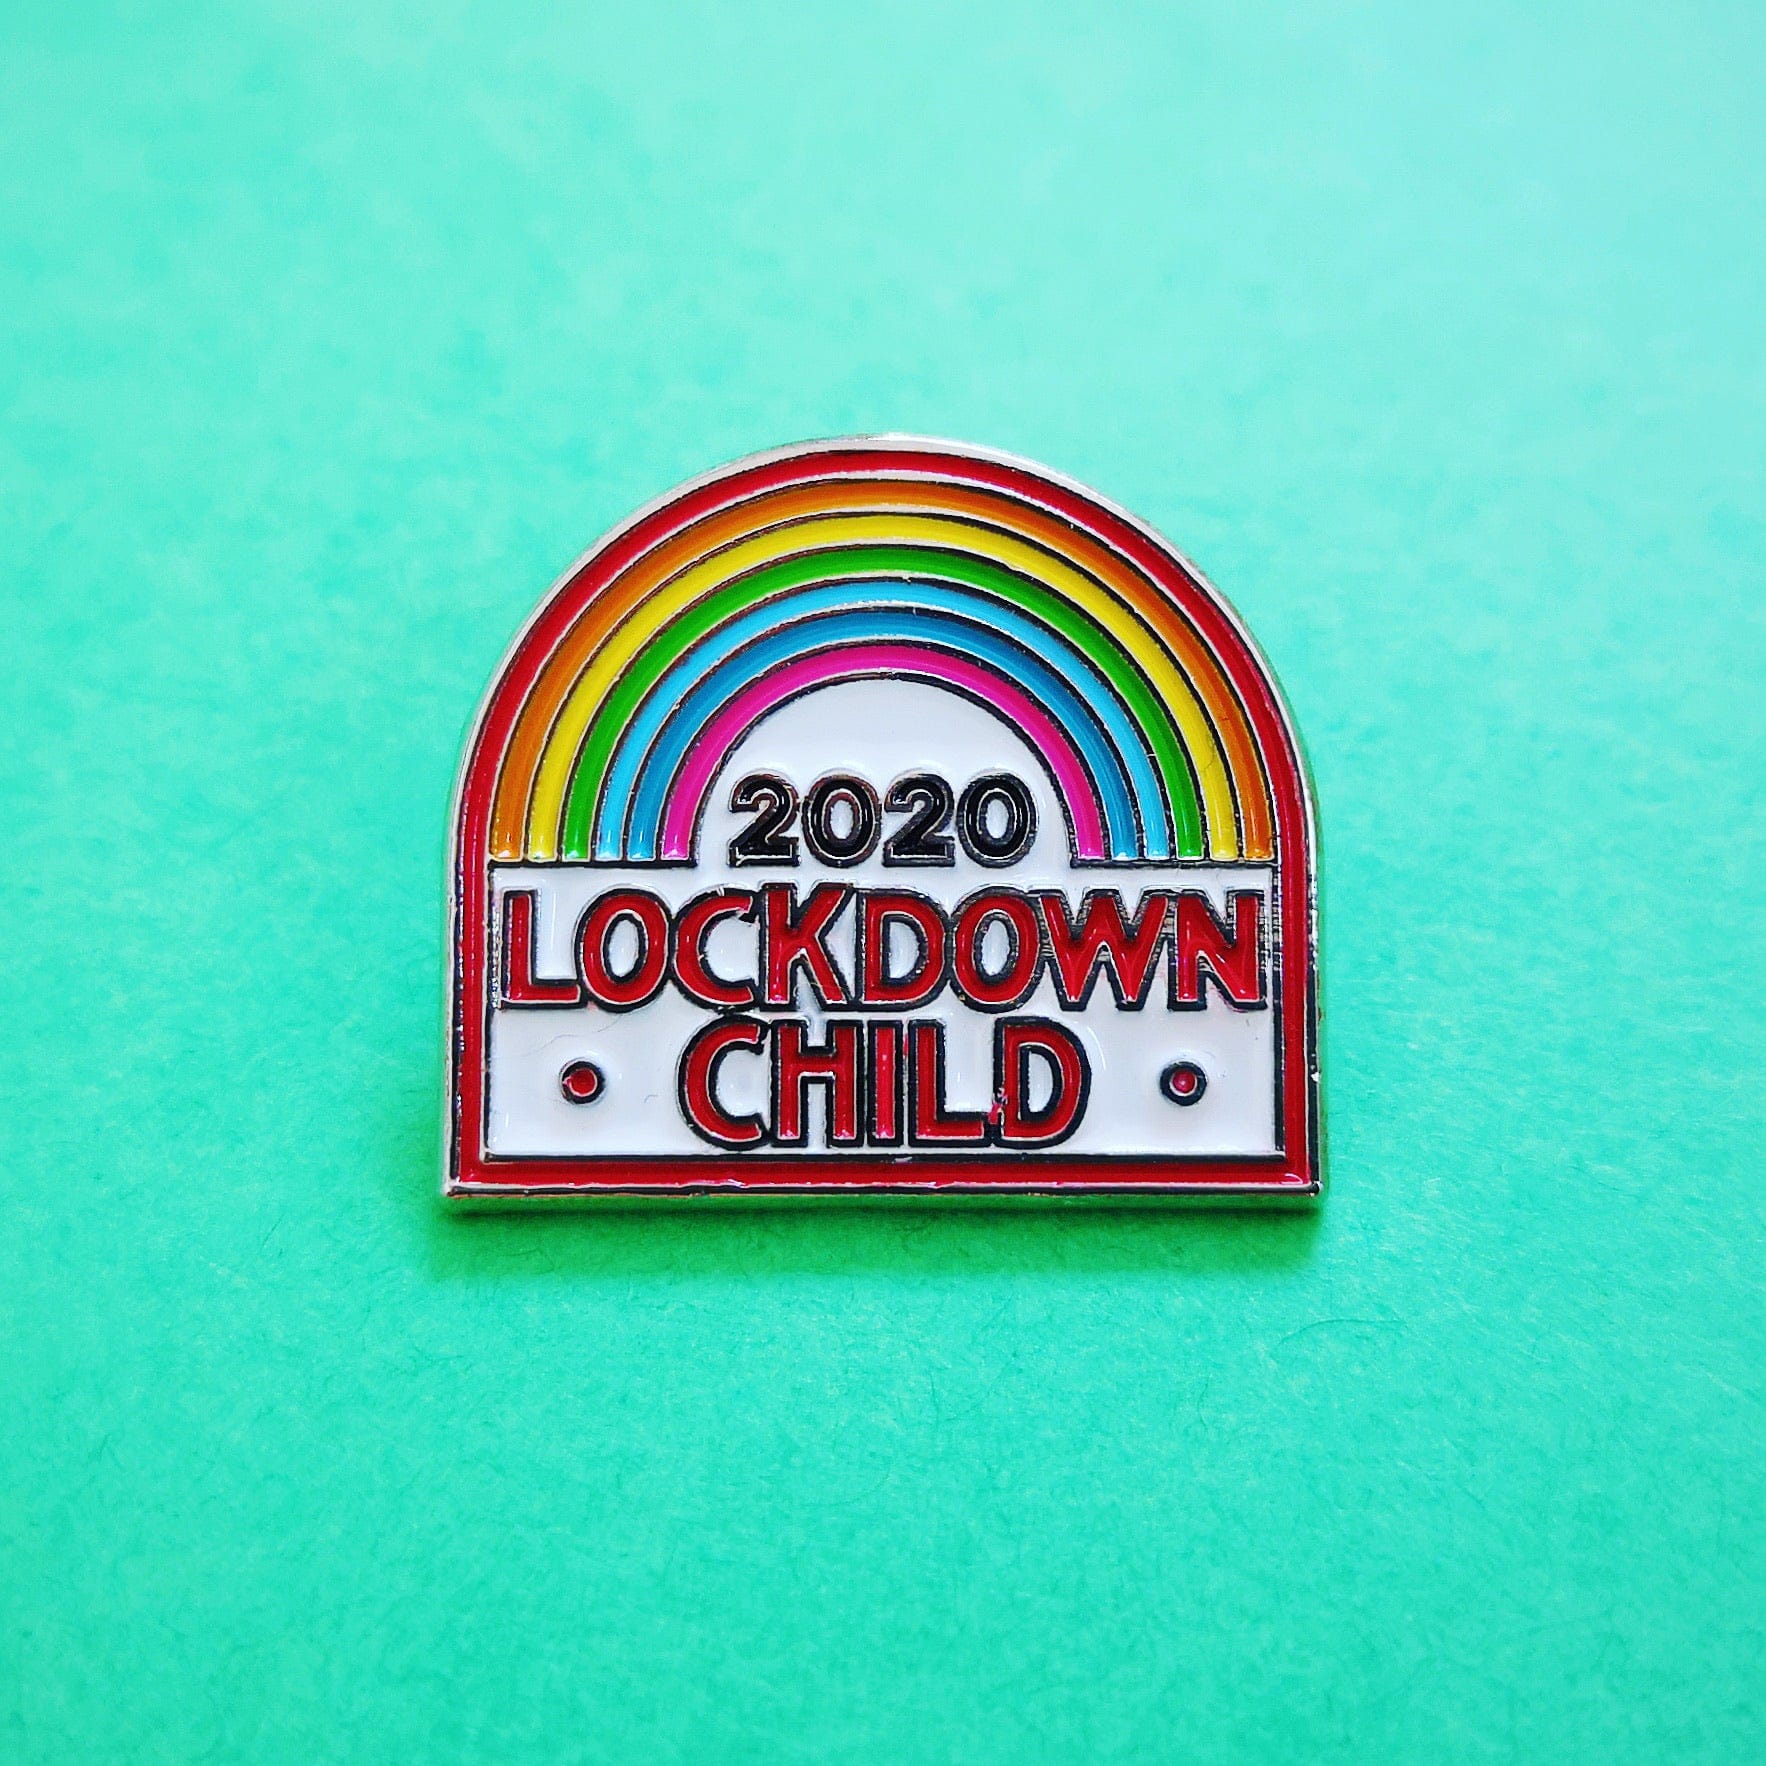 Lockdown Child 2020